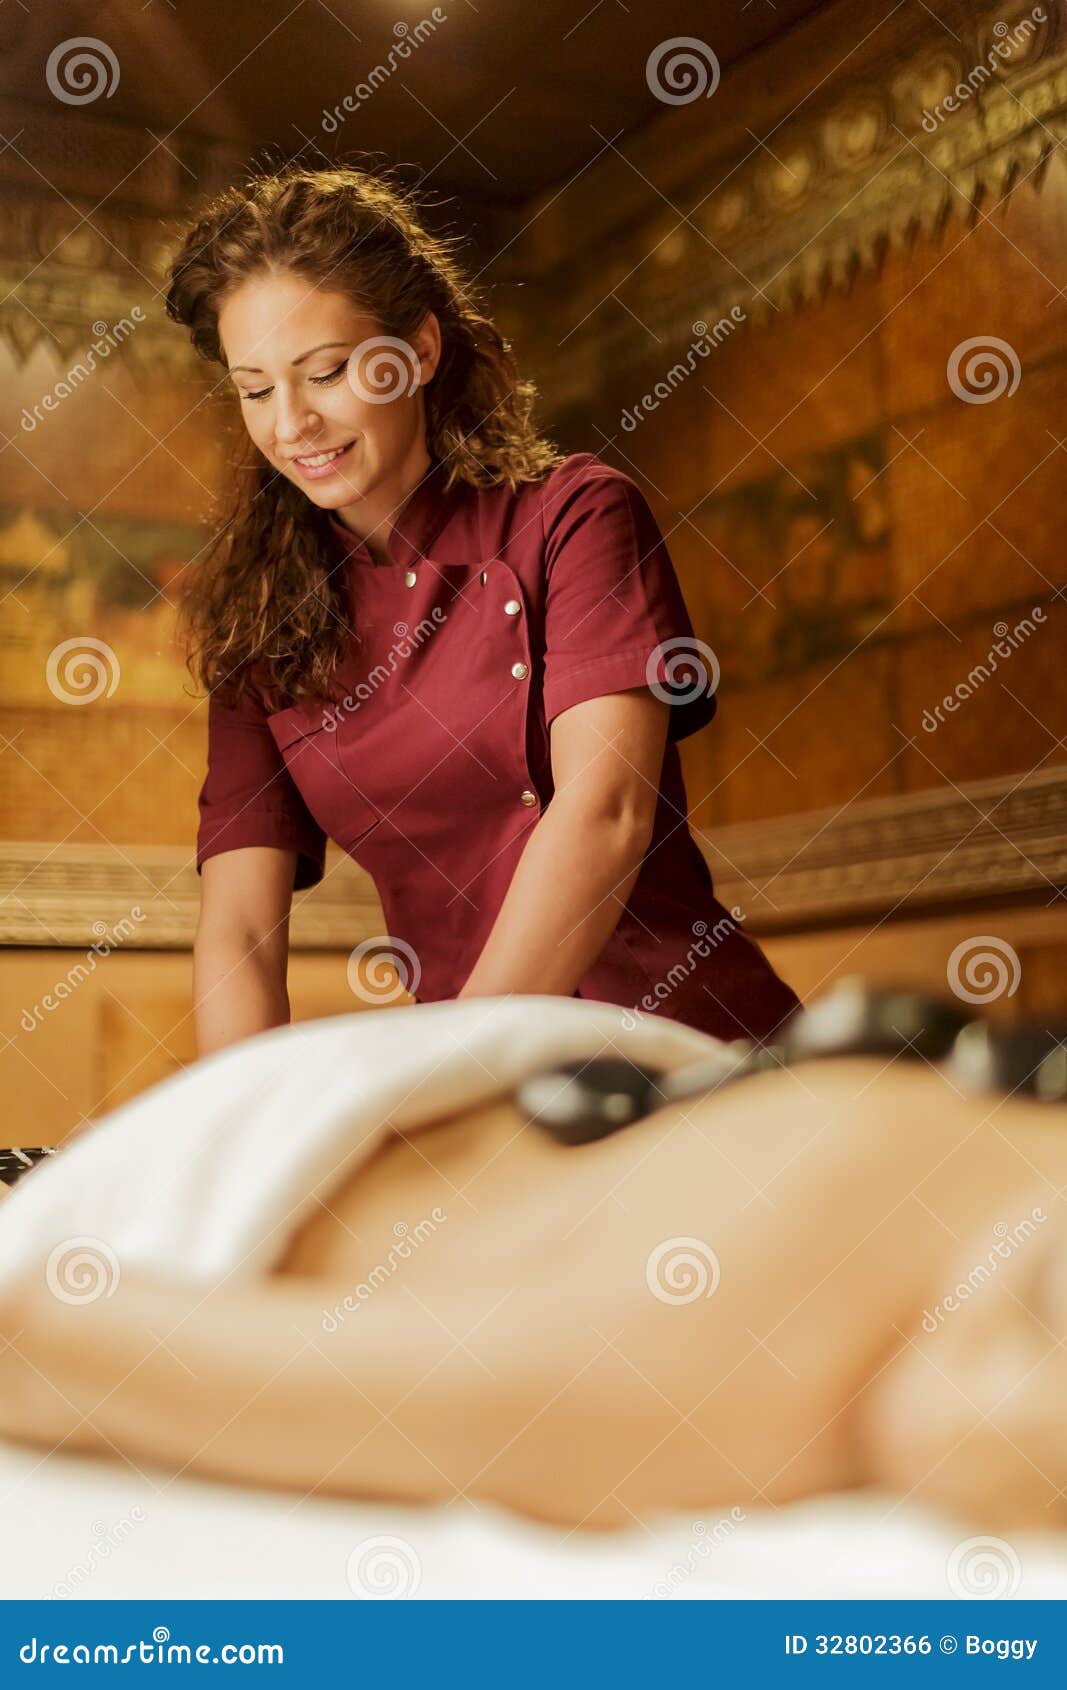 Hot Stone Massage Therapy Stock Phot